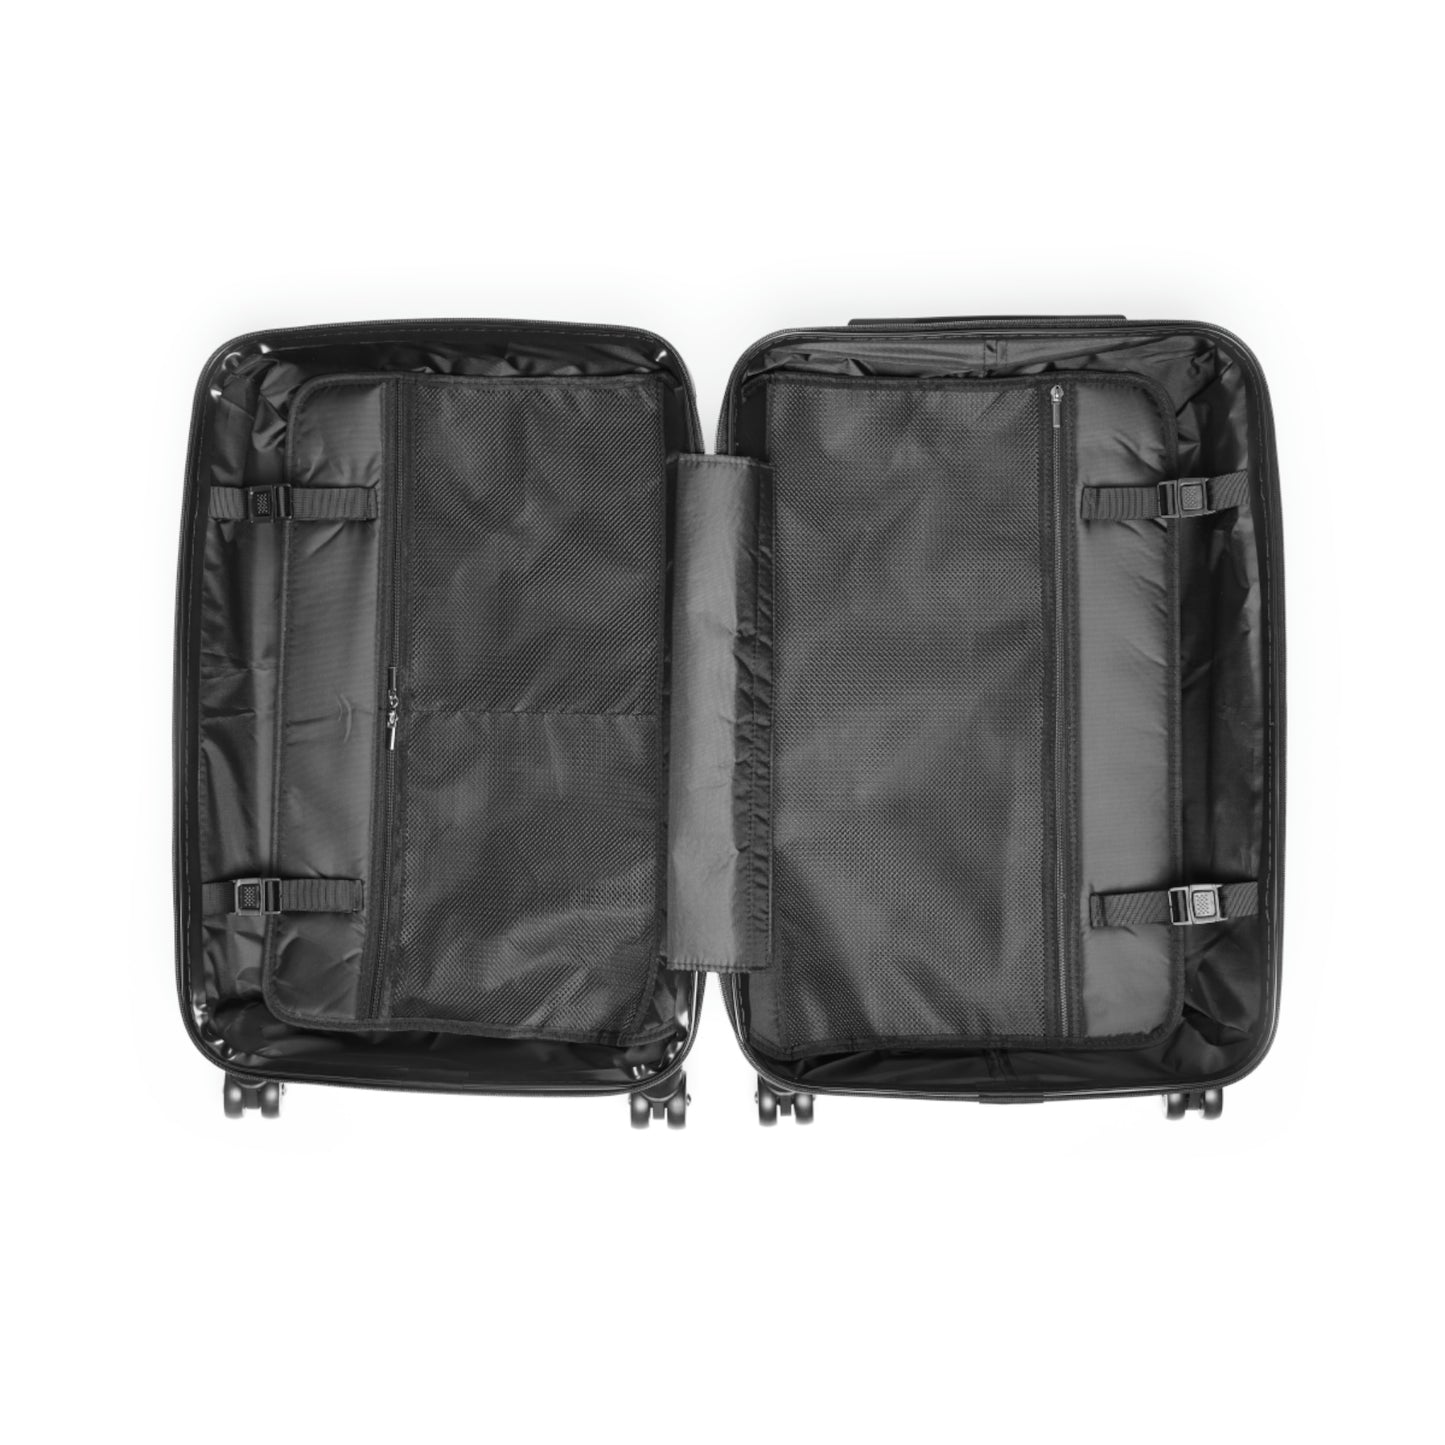 Geotrott Arizona Cardinals National Football League NFL Team Logo Cabin Suitcase Rolling Luggage Checking Bag-Bags-Geotrott